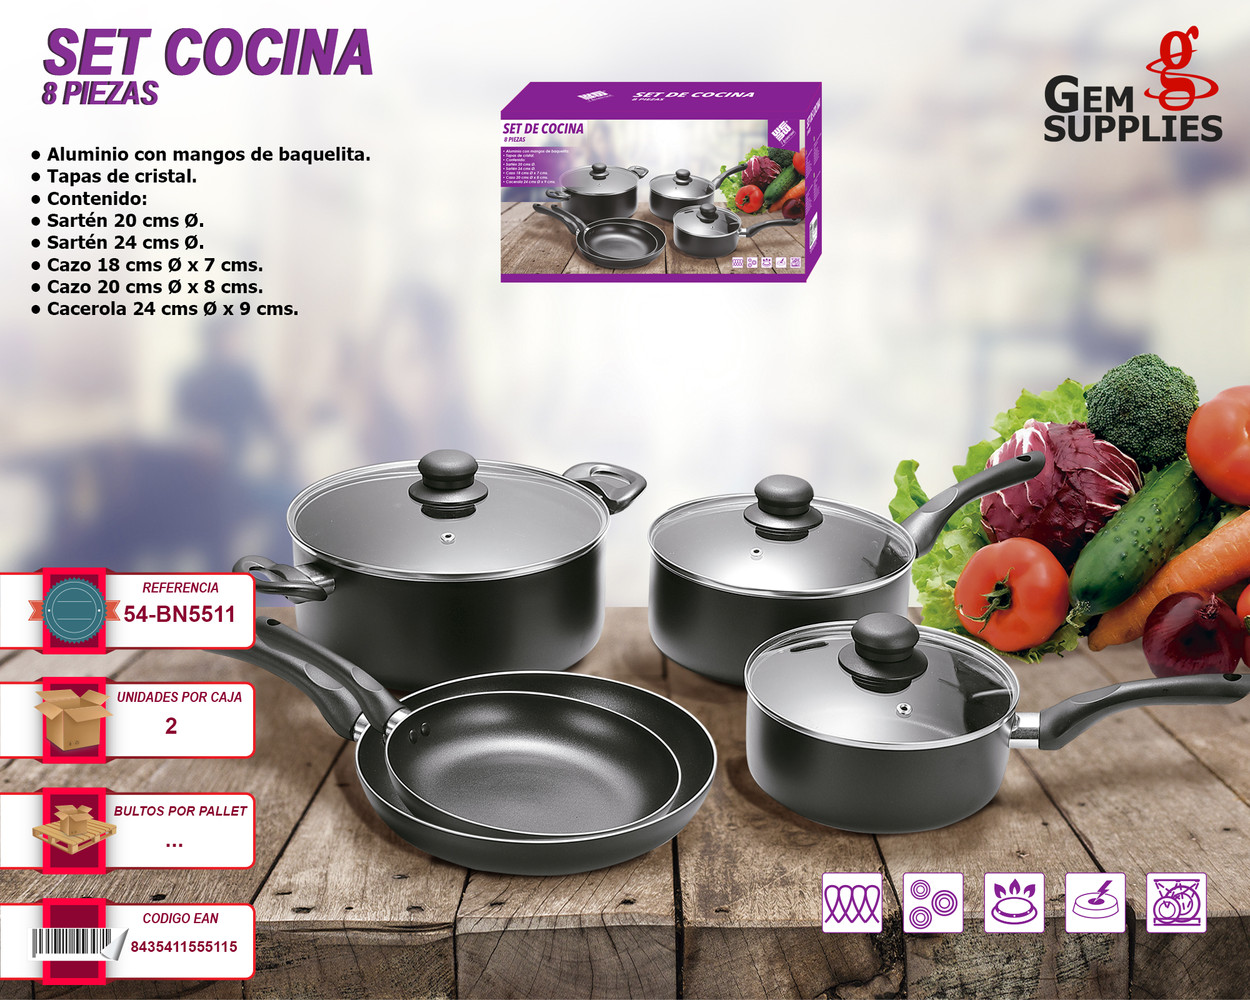 https://images.ssstatic.com/set-bateria-cocina-sartenes-8-piezas-we-houseware-67-700215800.jpg